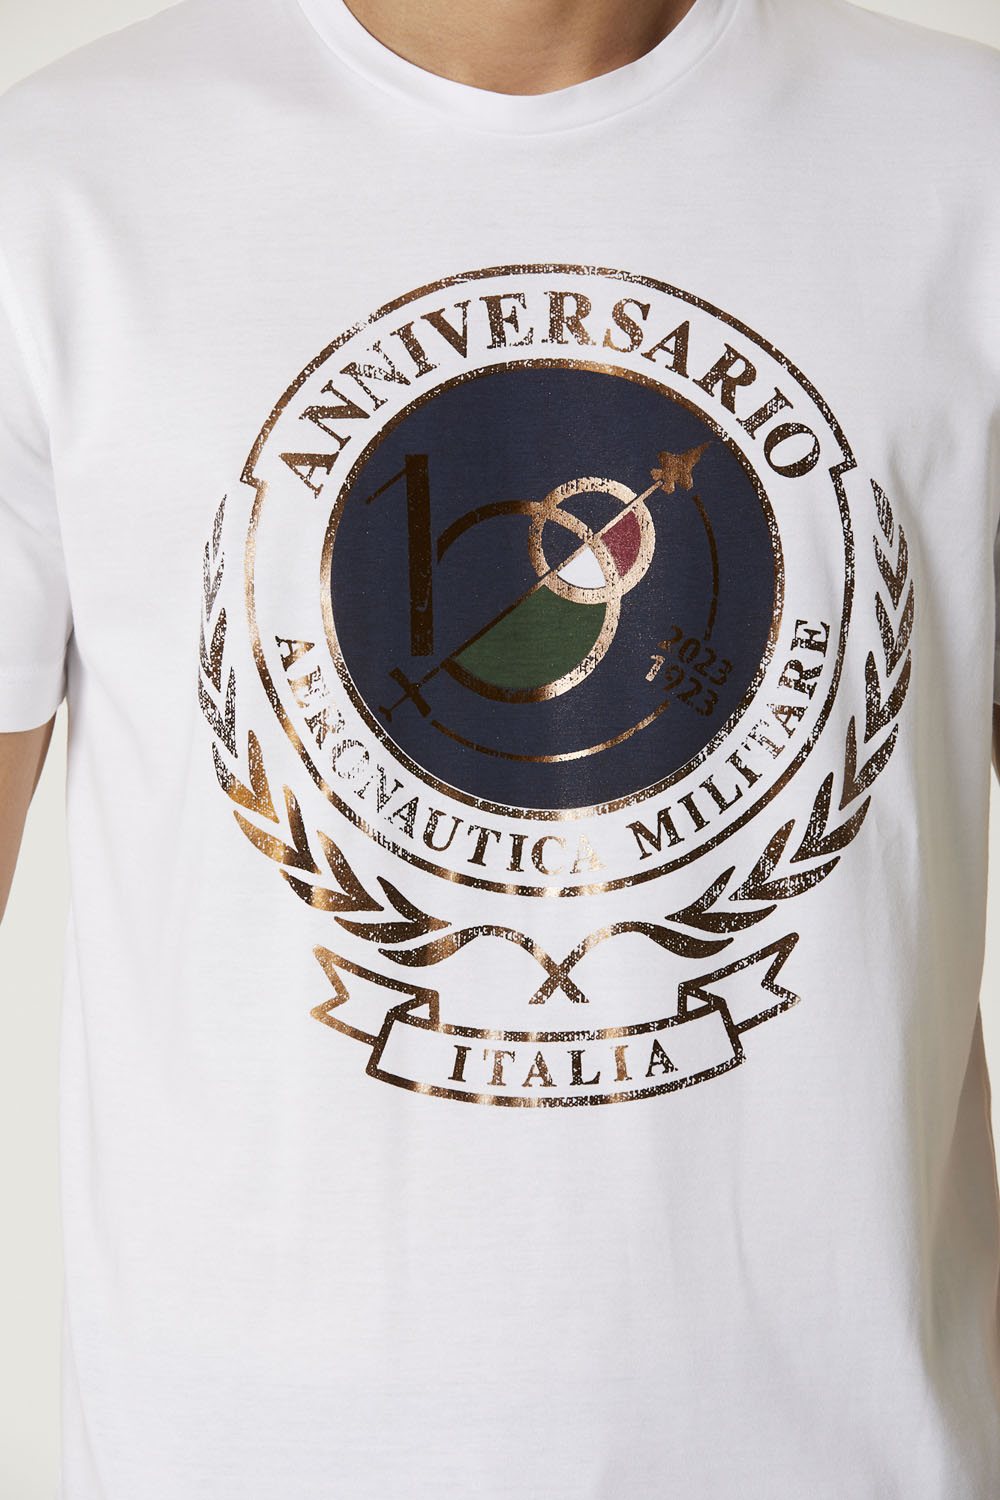 AM Centenary Printed T-Shirt